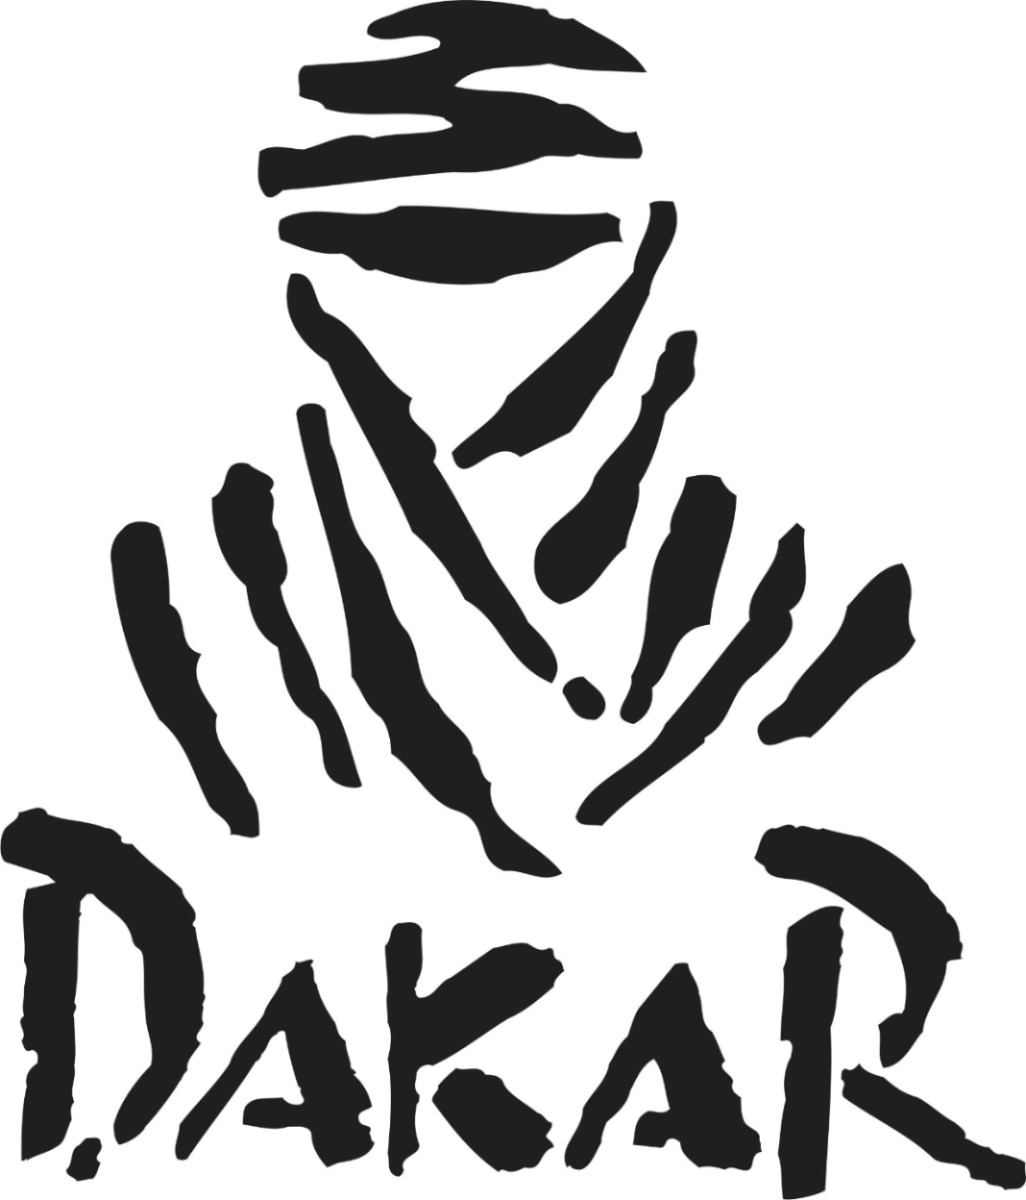 Amazing Dakar Pictures & Backgrounds